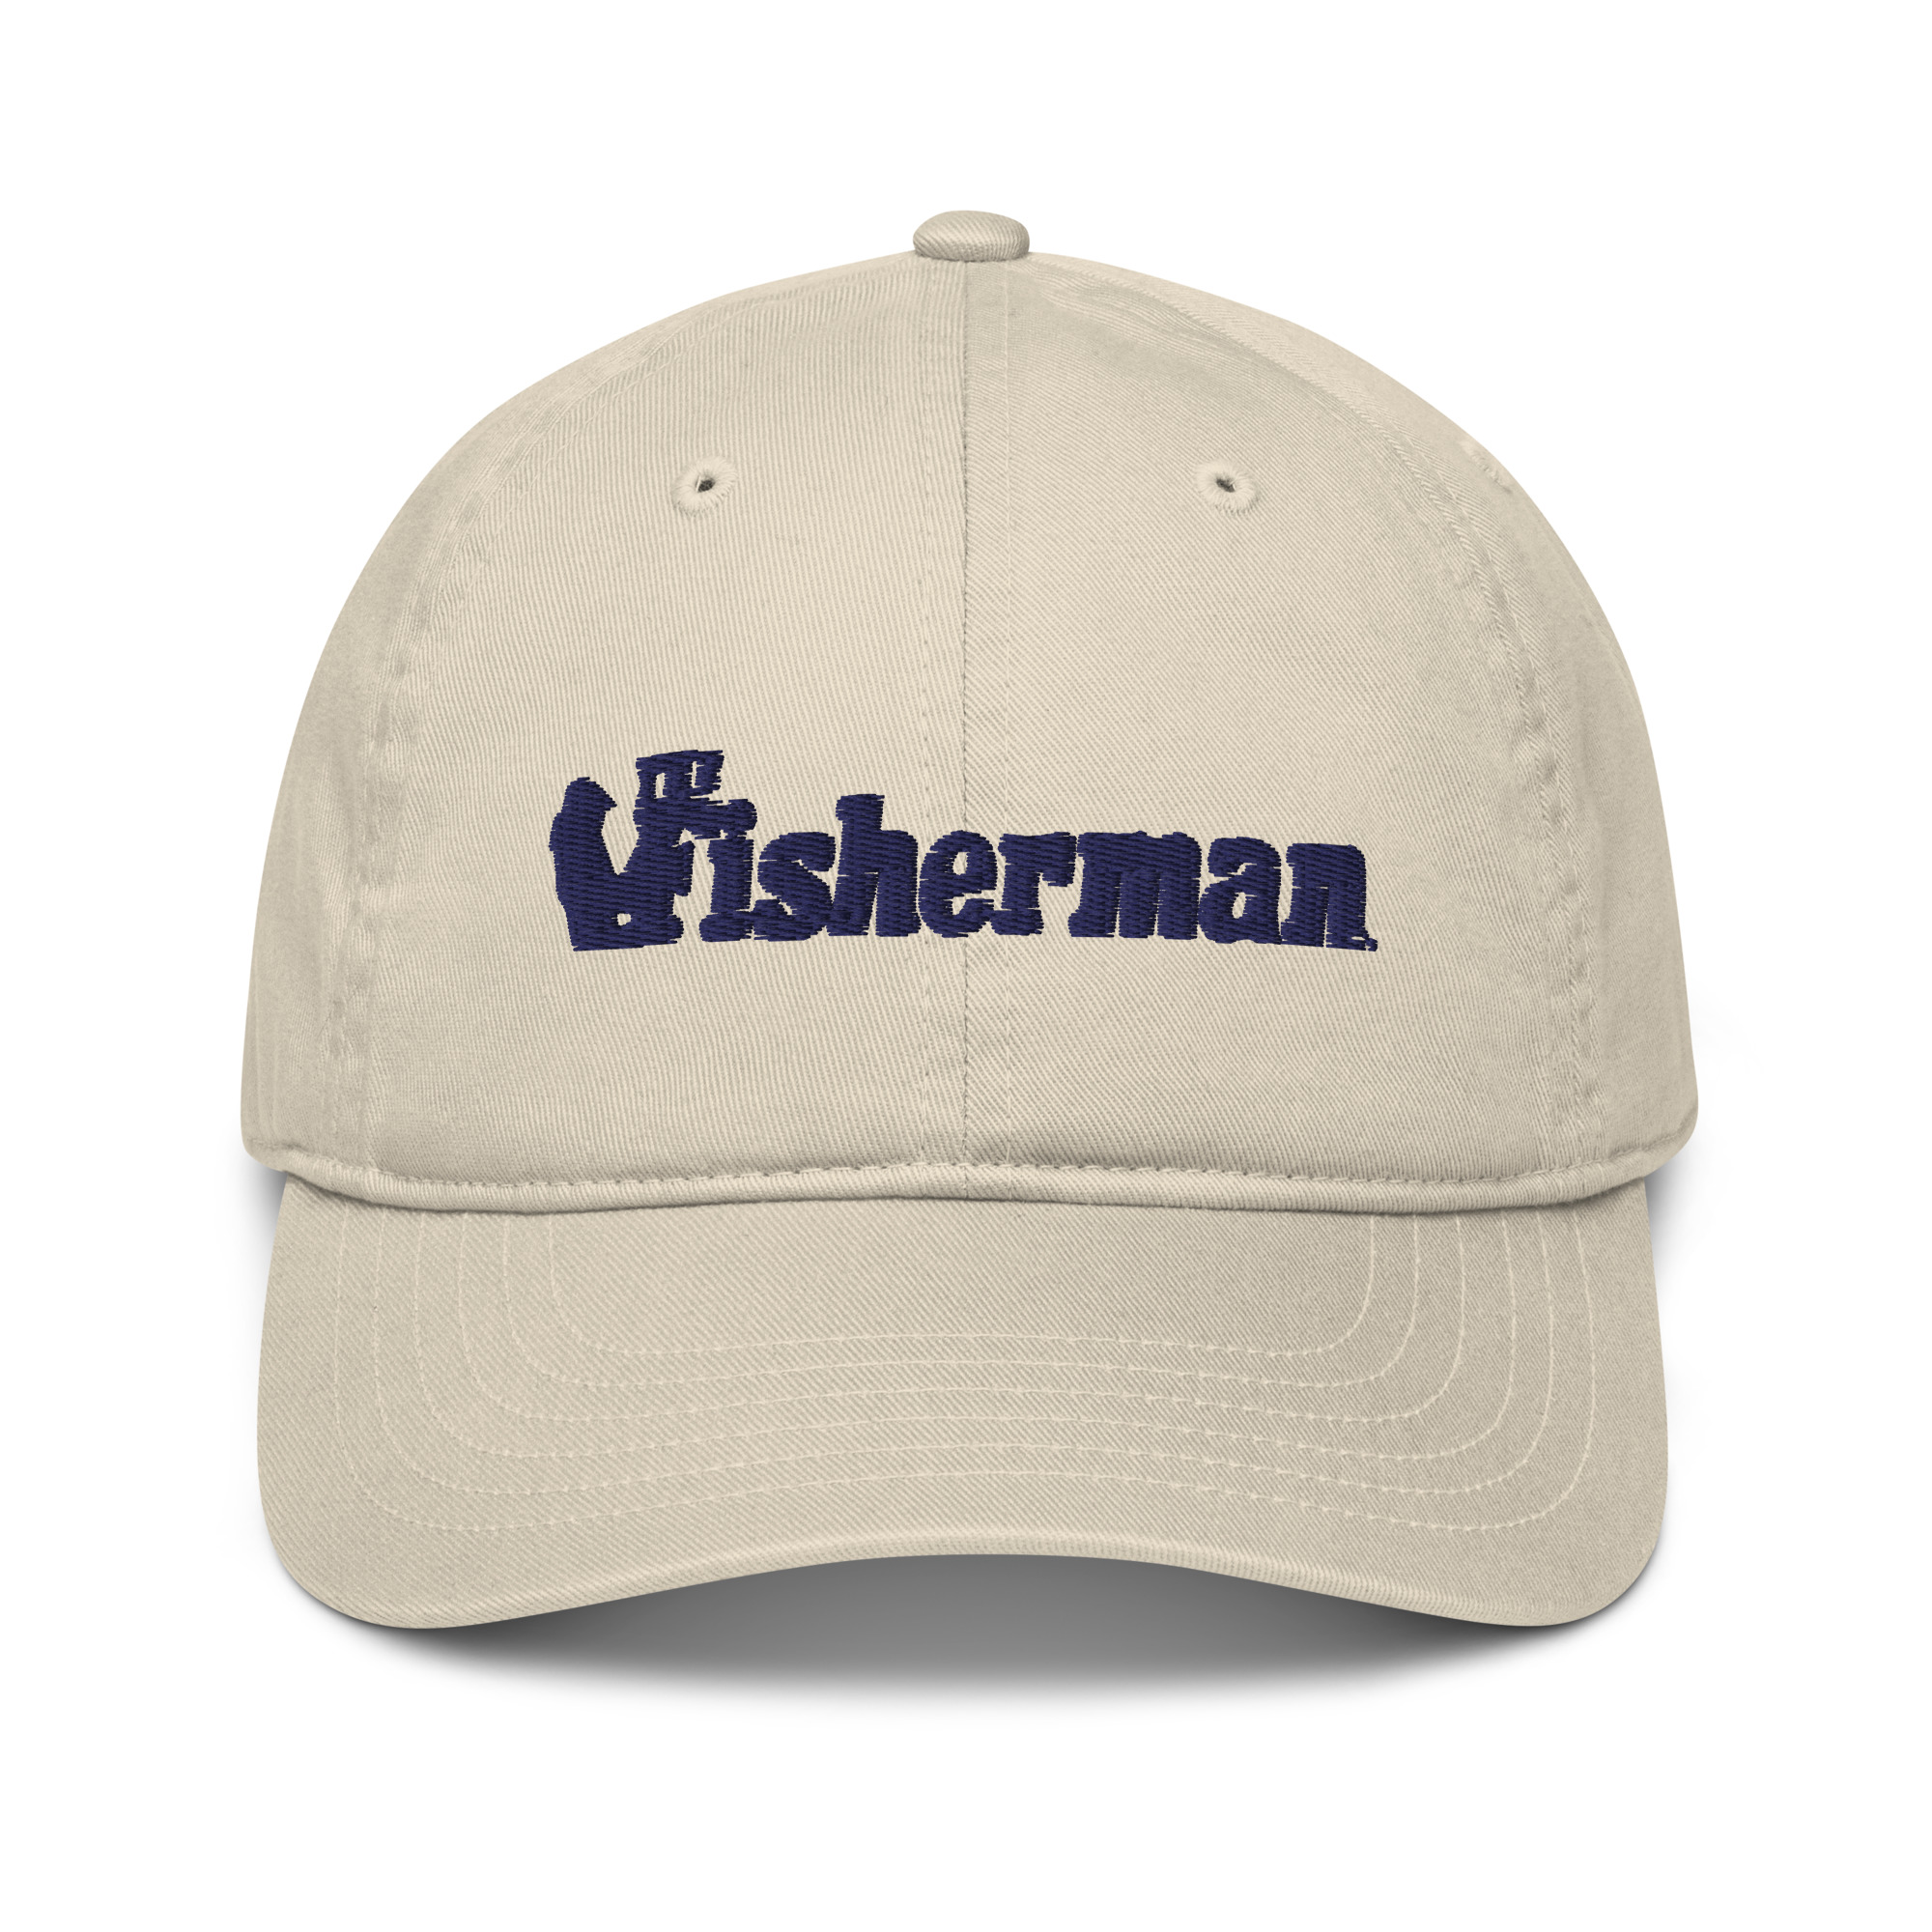 Organic dad hat - The Fisherman